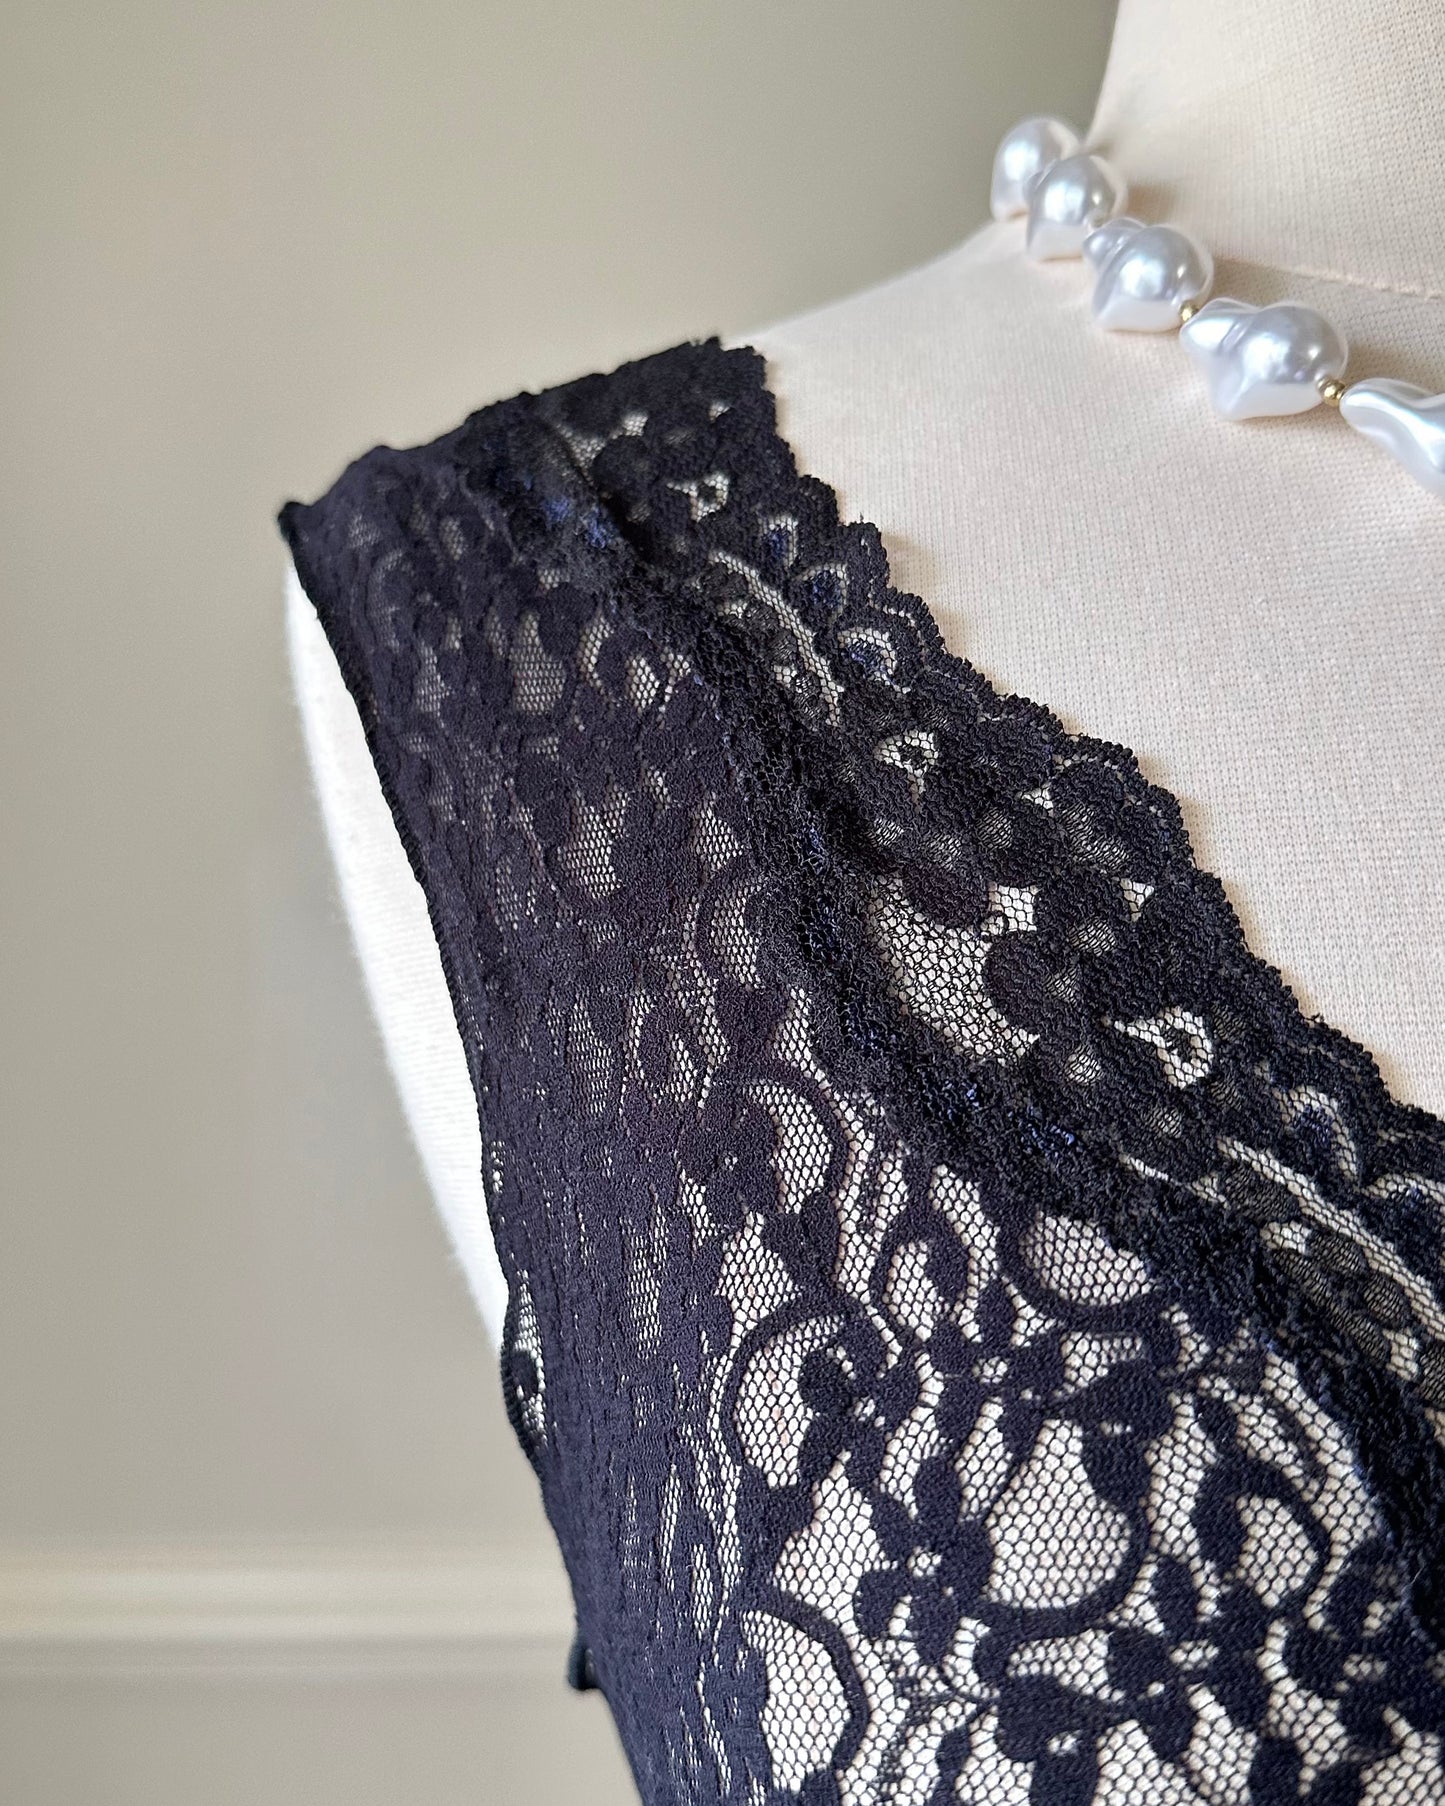 Dark Feminine Midi Dress featuring Complete Sheer Lace Bodice